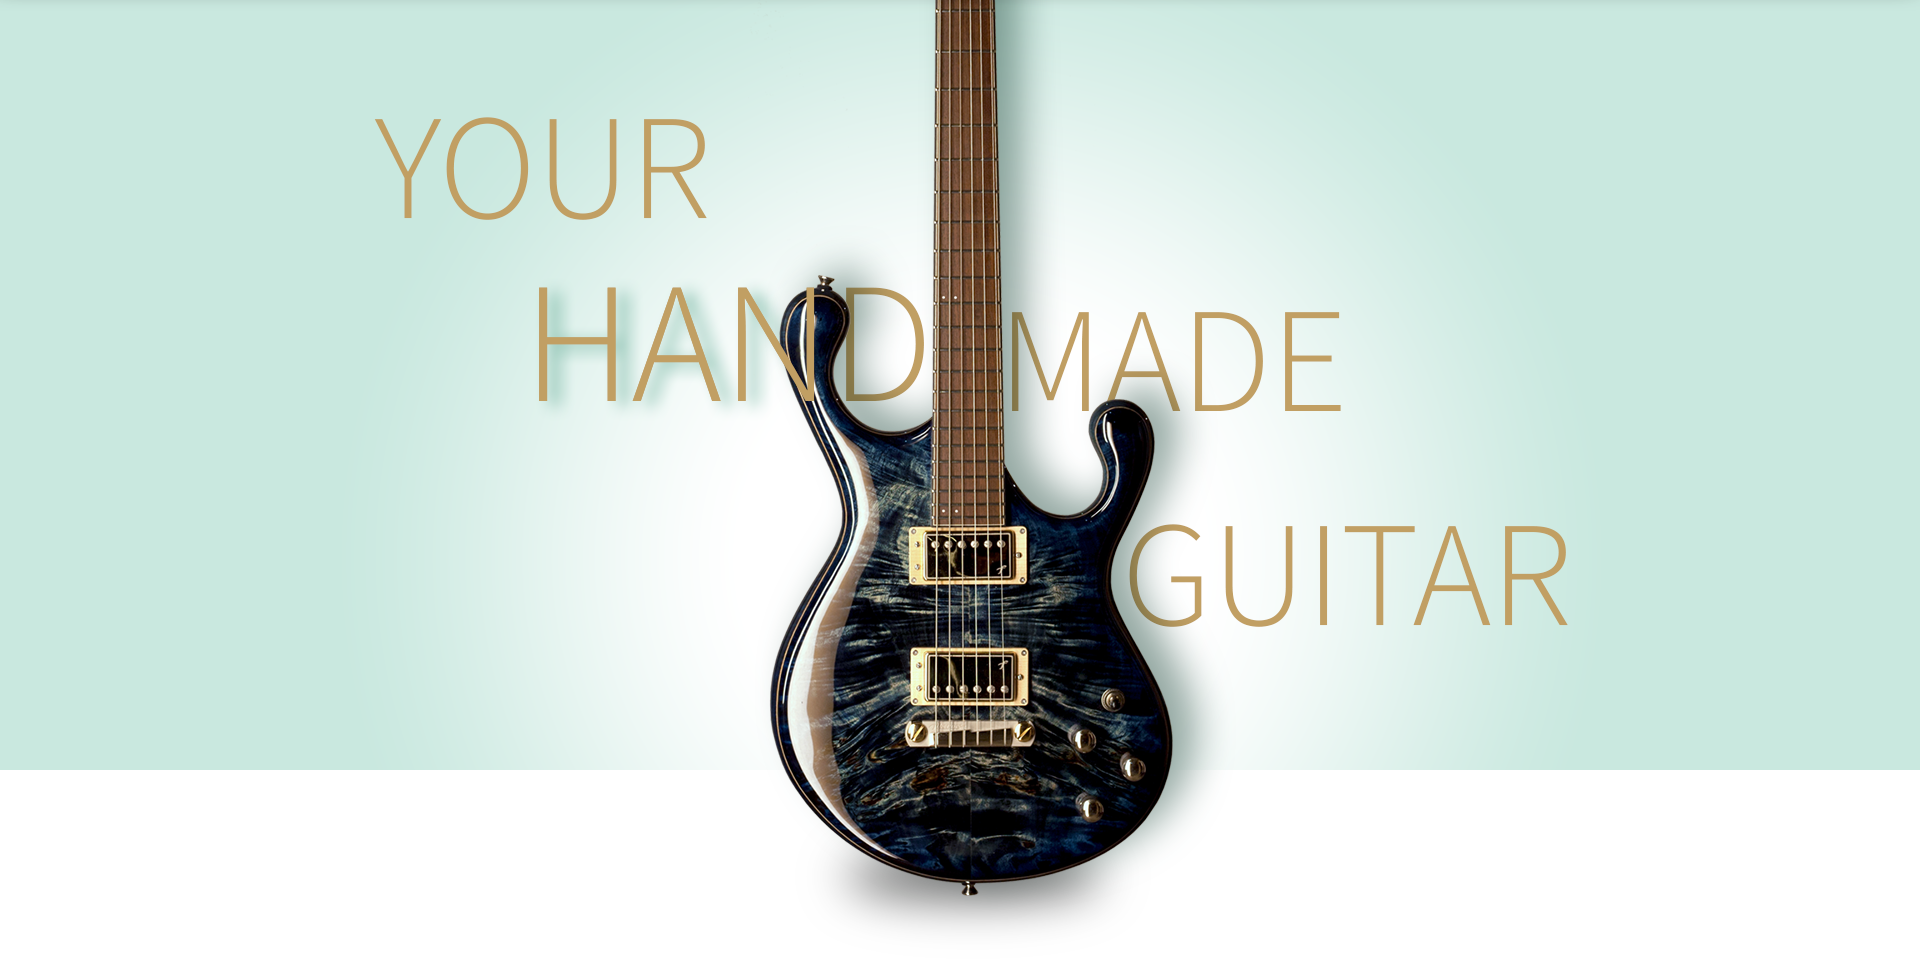 Your handmade guitar